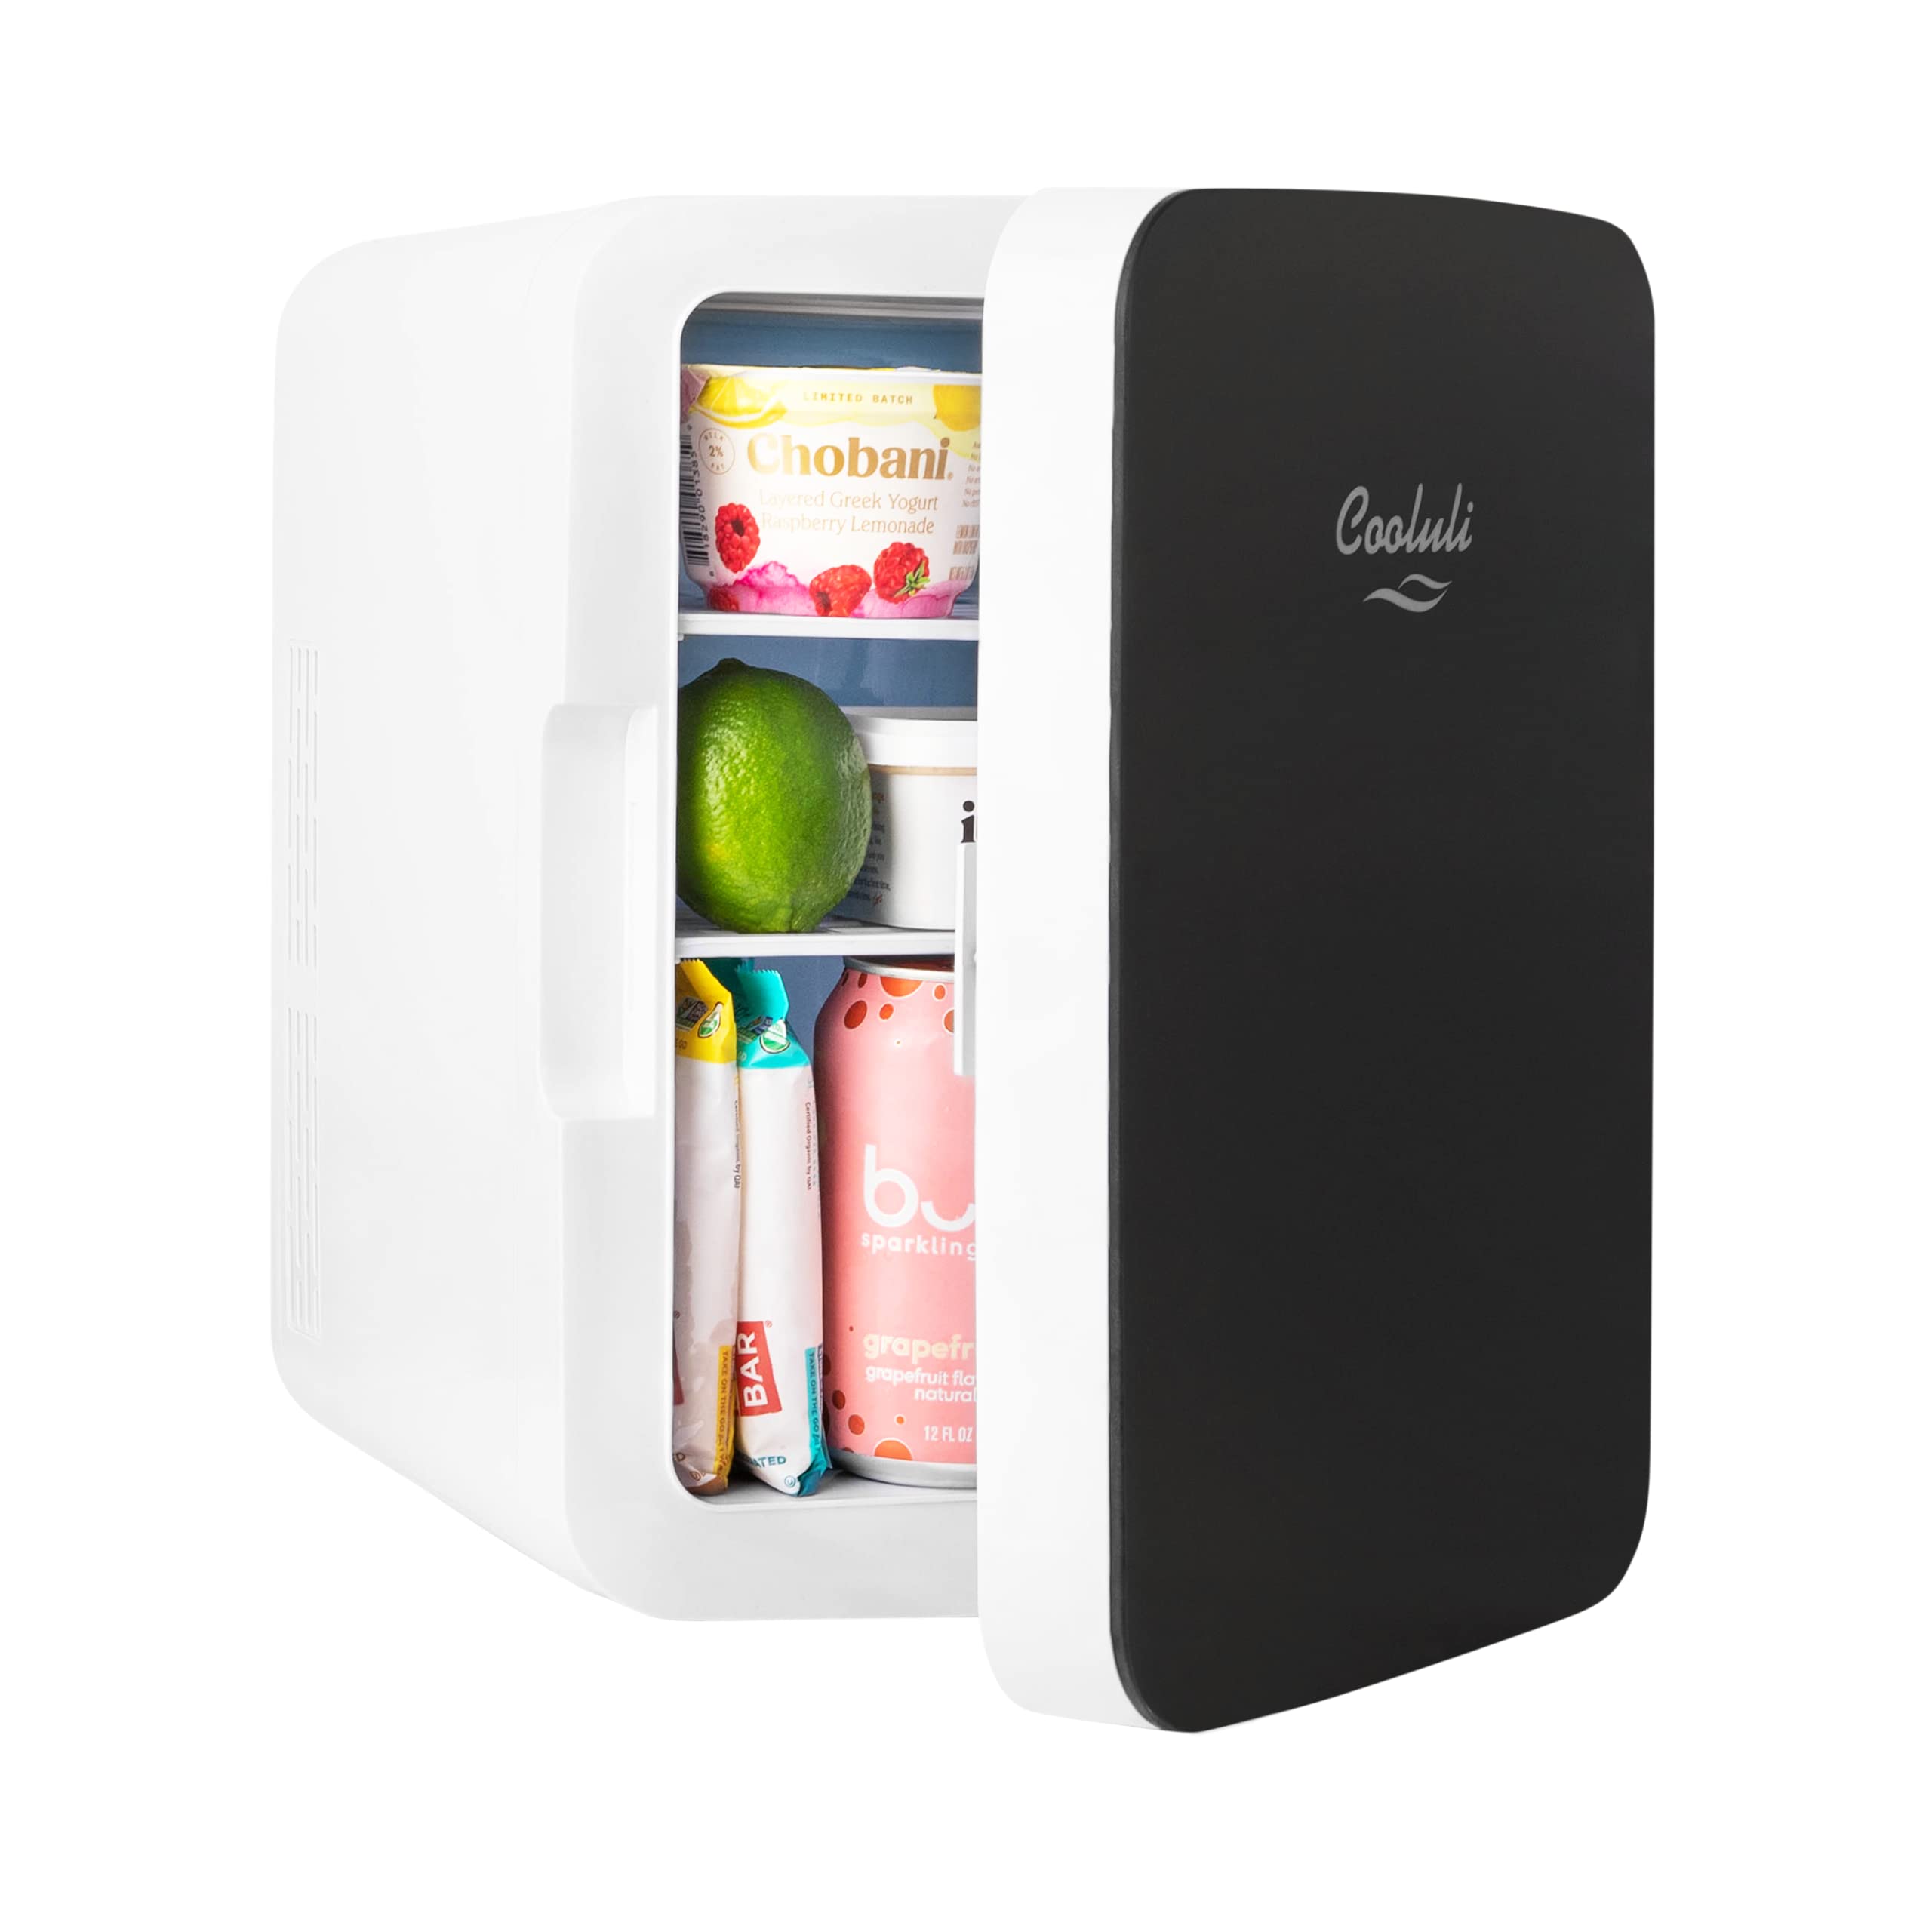 Cooluli Mini Fridge for Bedroom - Car, Office Desk & College Dorm Room - 12v Portable Cooler & Warmer for Food, Drinks, Skincare, Beauty & Makeup - AC/DC Small Refrigerator  - Like New